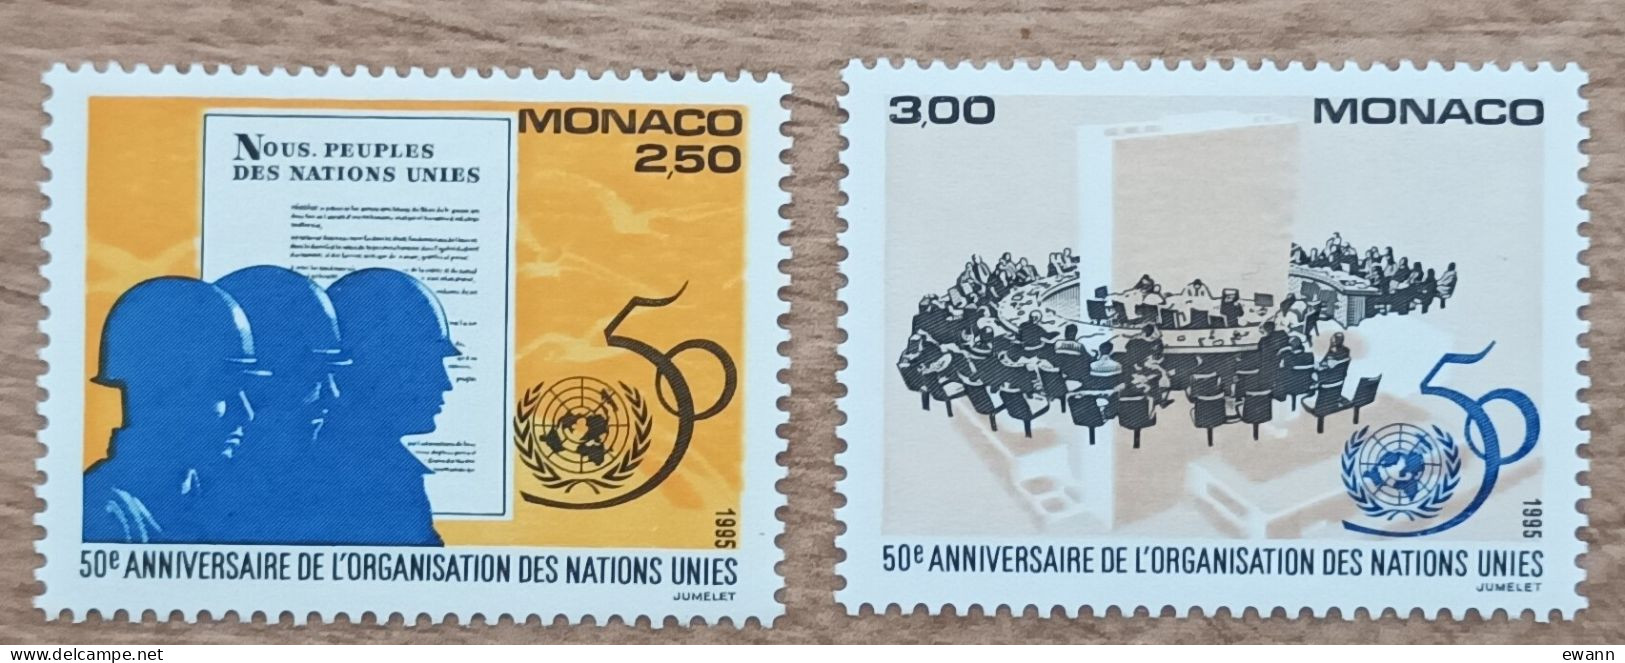 Monaco - YT N°2002, 2003 - 50e Anniversaire De L'Organisation Des Nations Unies / ONU - 1995 - Neuf - Ungebraucht